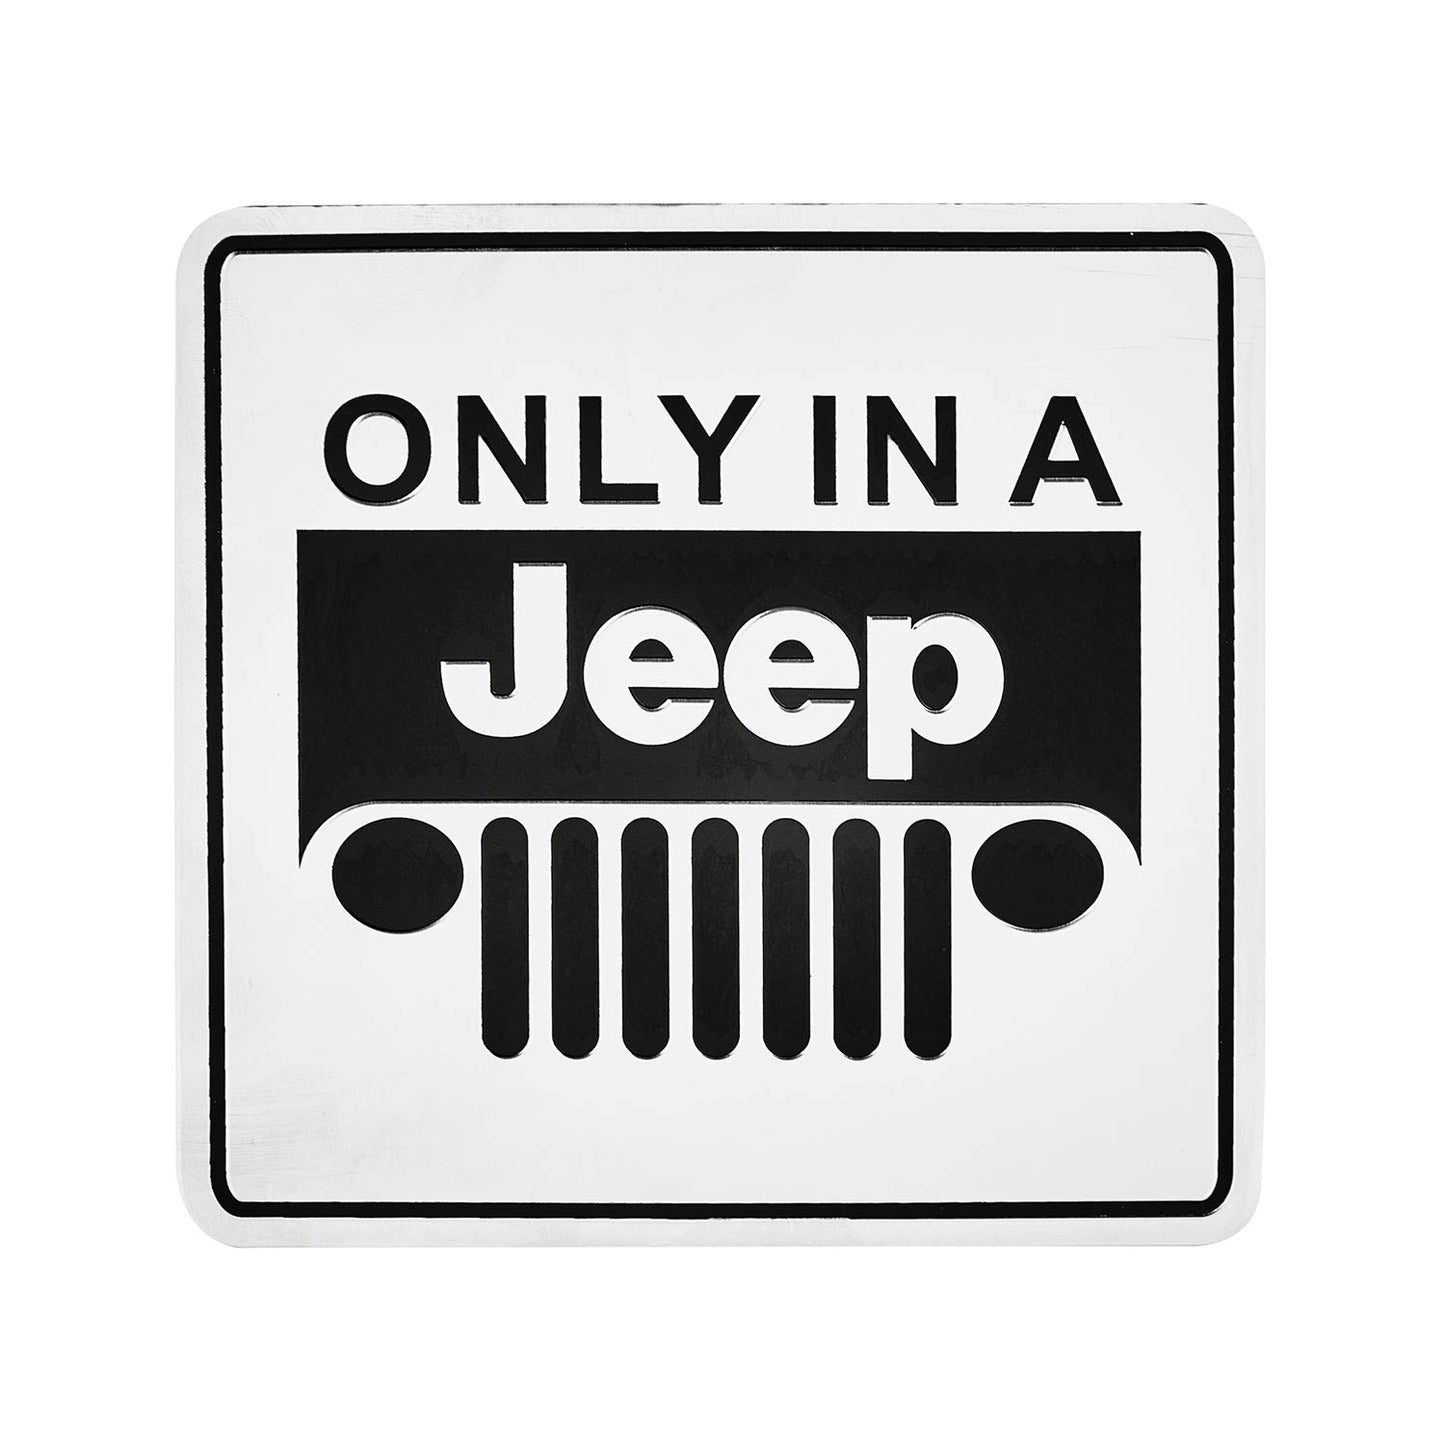 Only In a Jeep logo emblem sticker